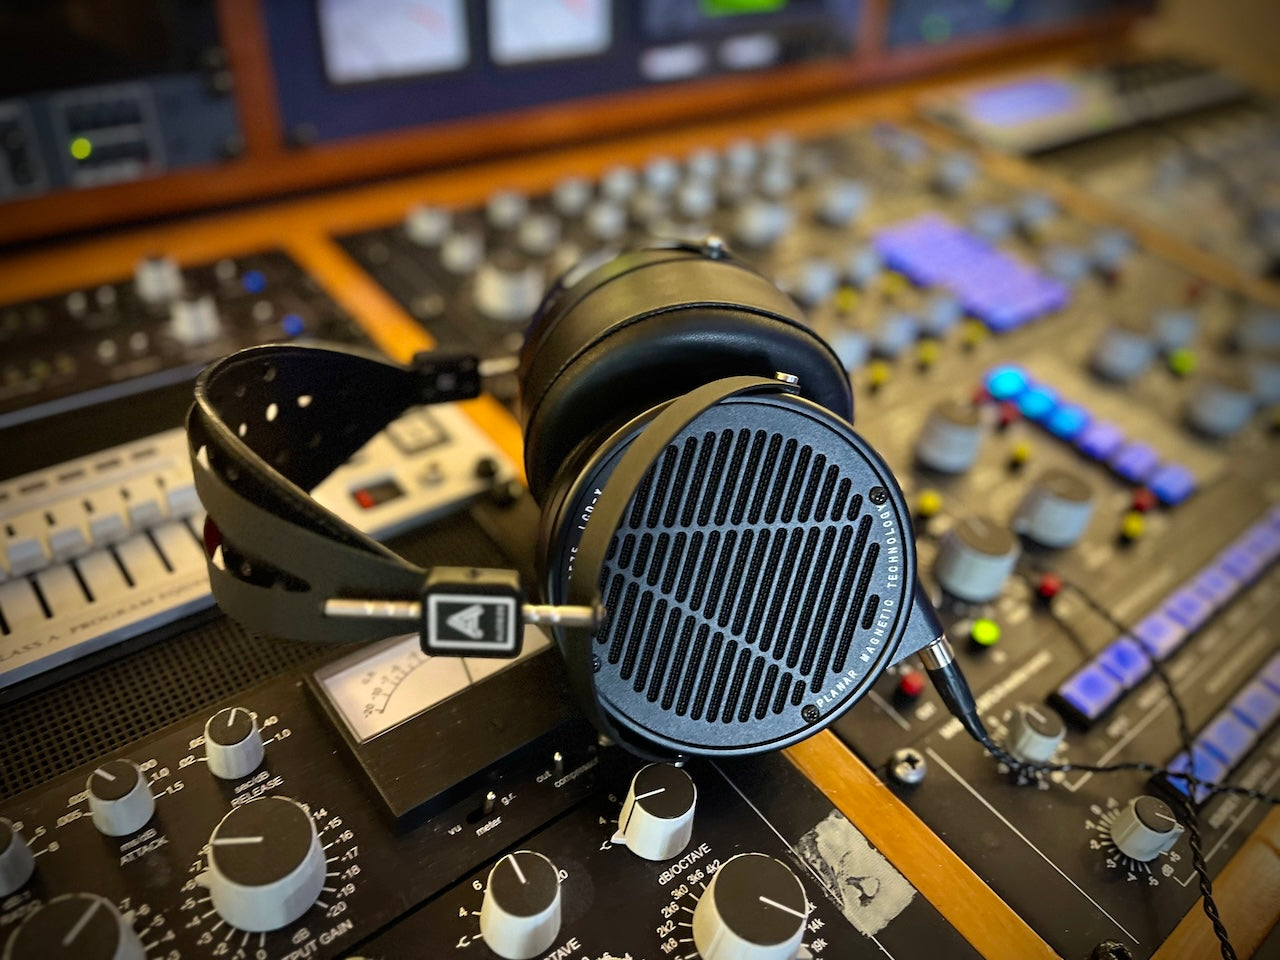 Audeze LCD-X headphones on mixing table